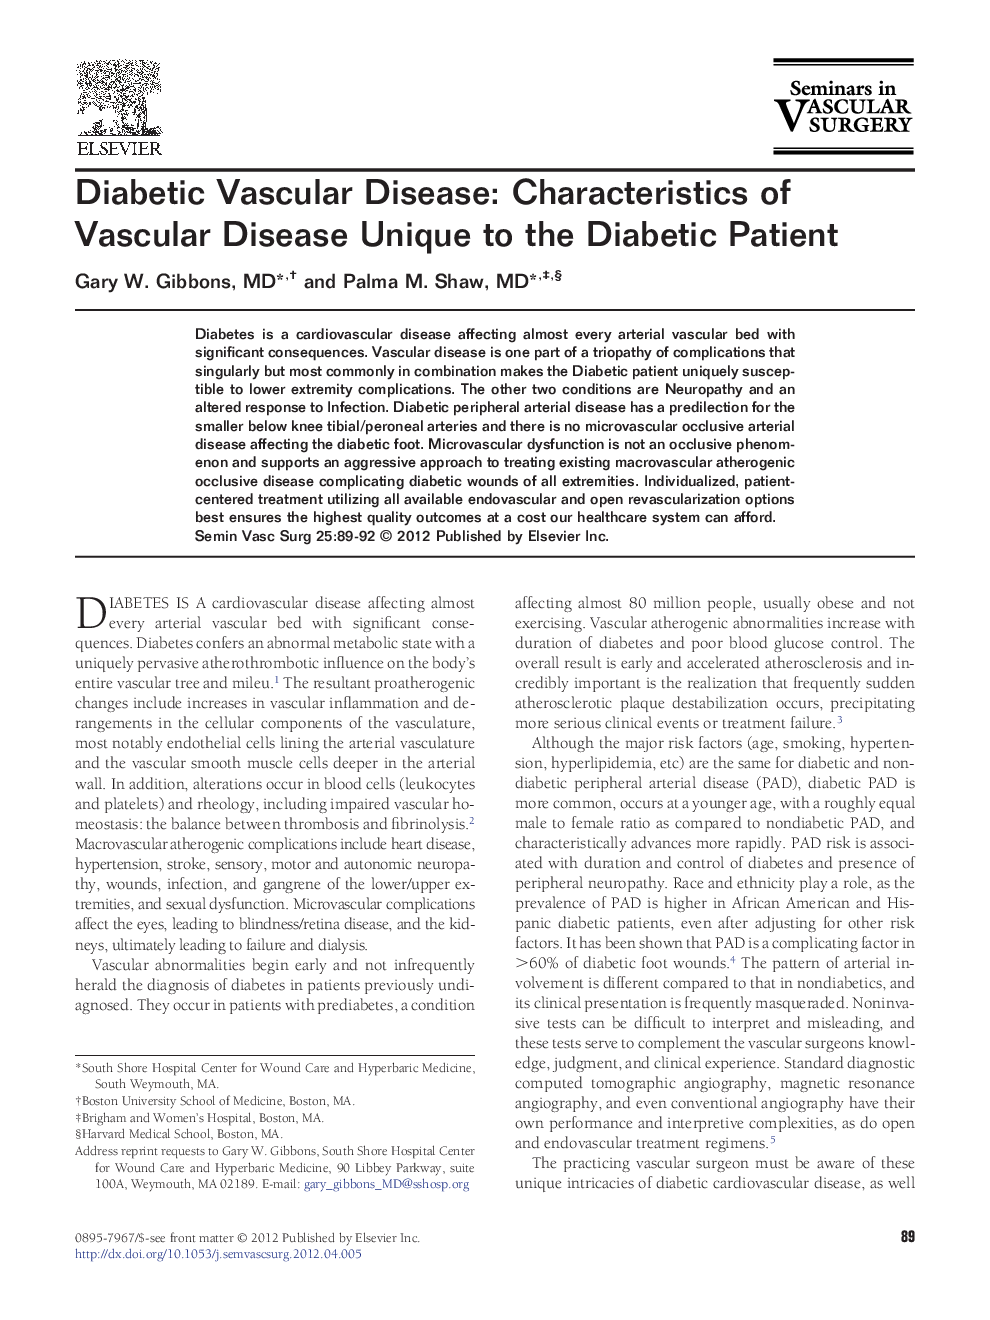 Diabetic Vascular Disease: Characteristics of Vascular Disease Unique to the Diabetic Patient